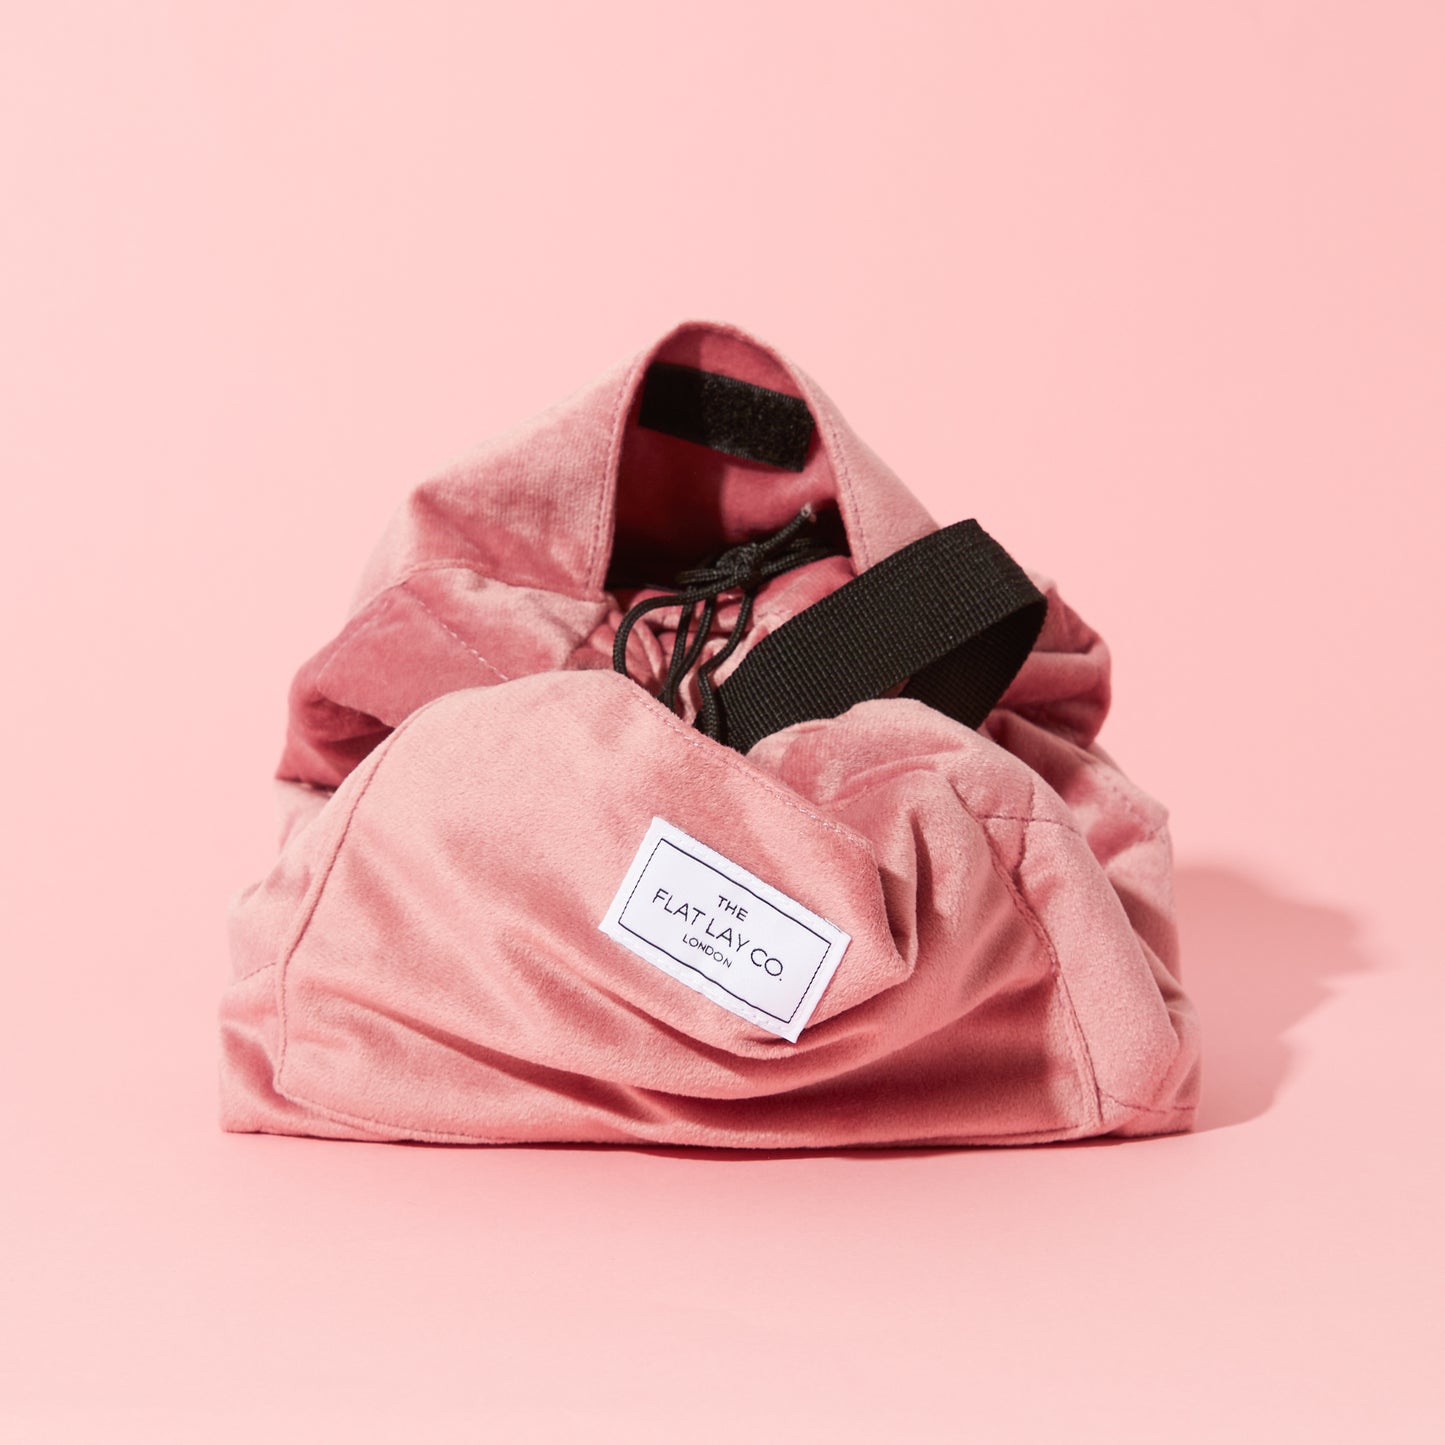 Pink Velvet  Full Size Flat Lay Makeup Bag